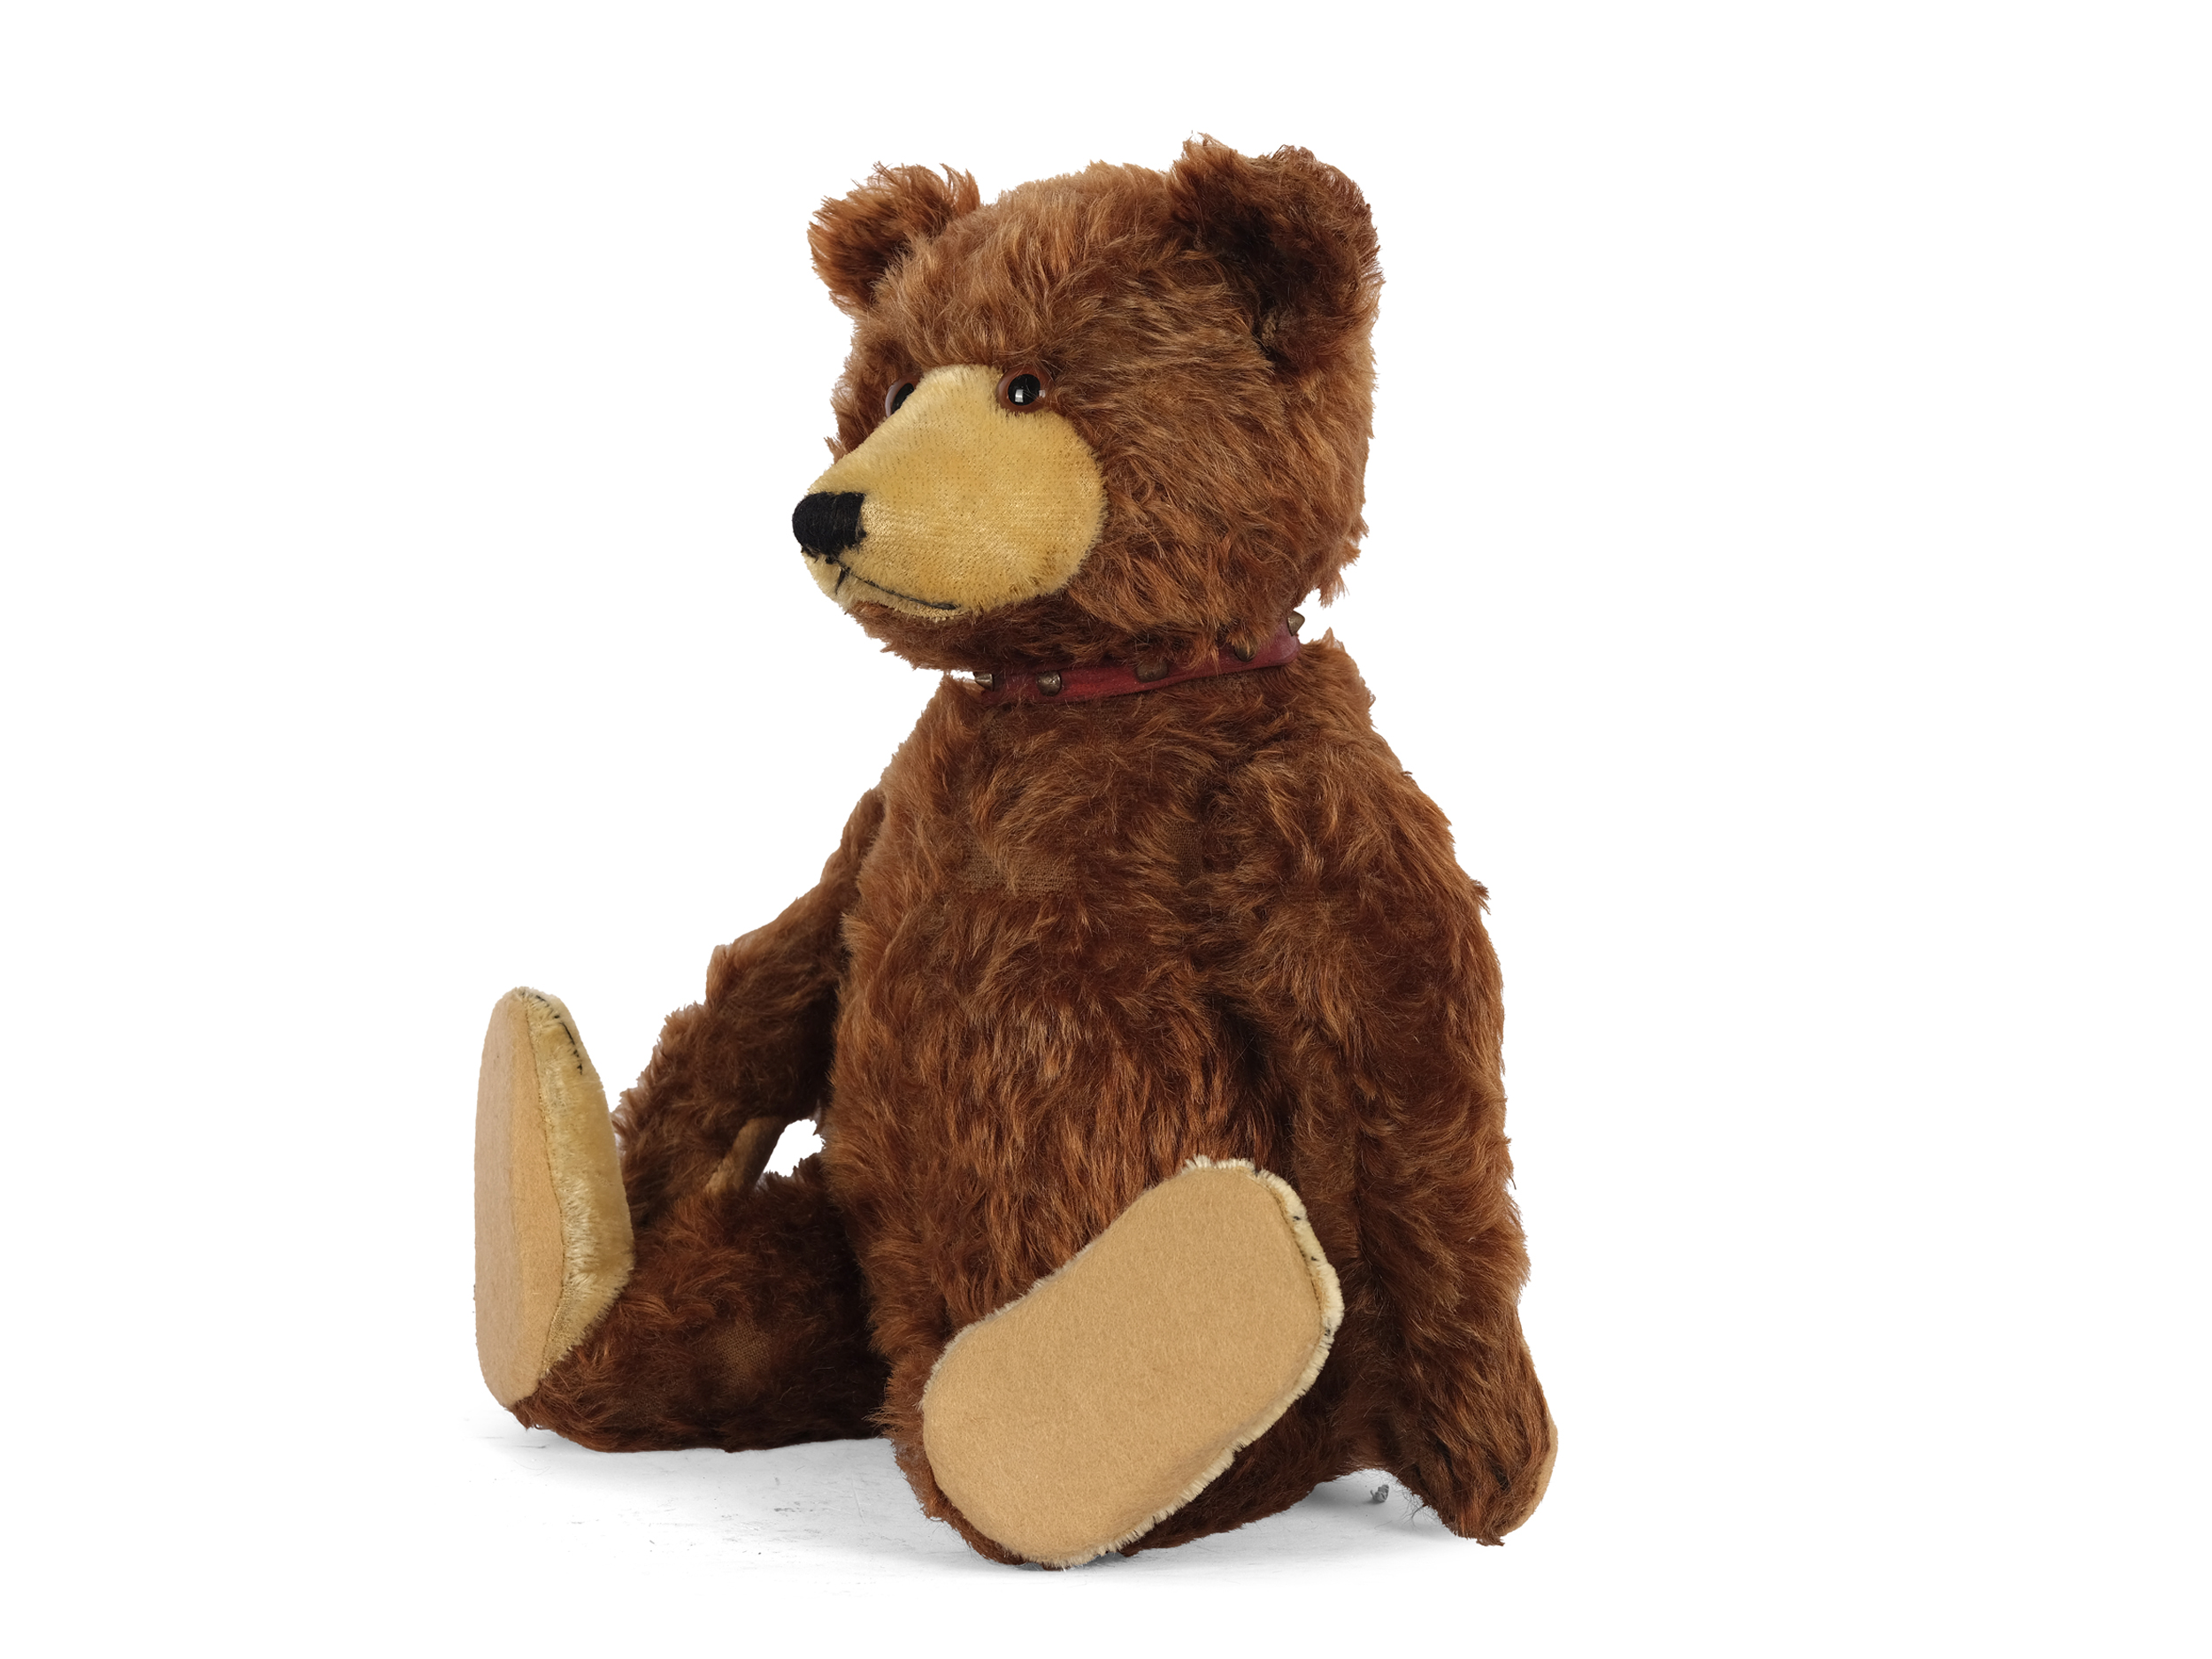 Teddy bear "Baby", Steiff - Image 3 of 4